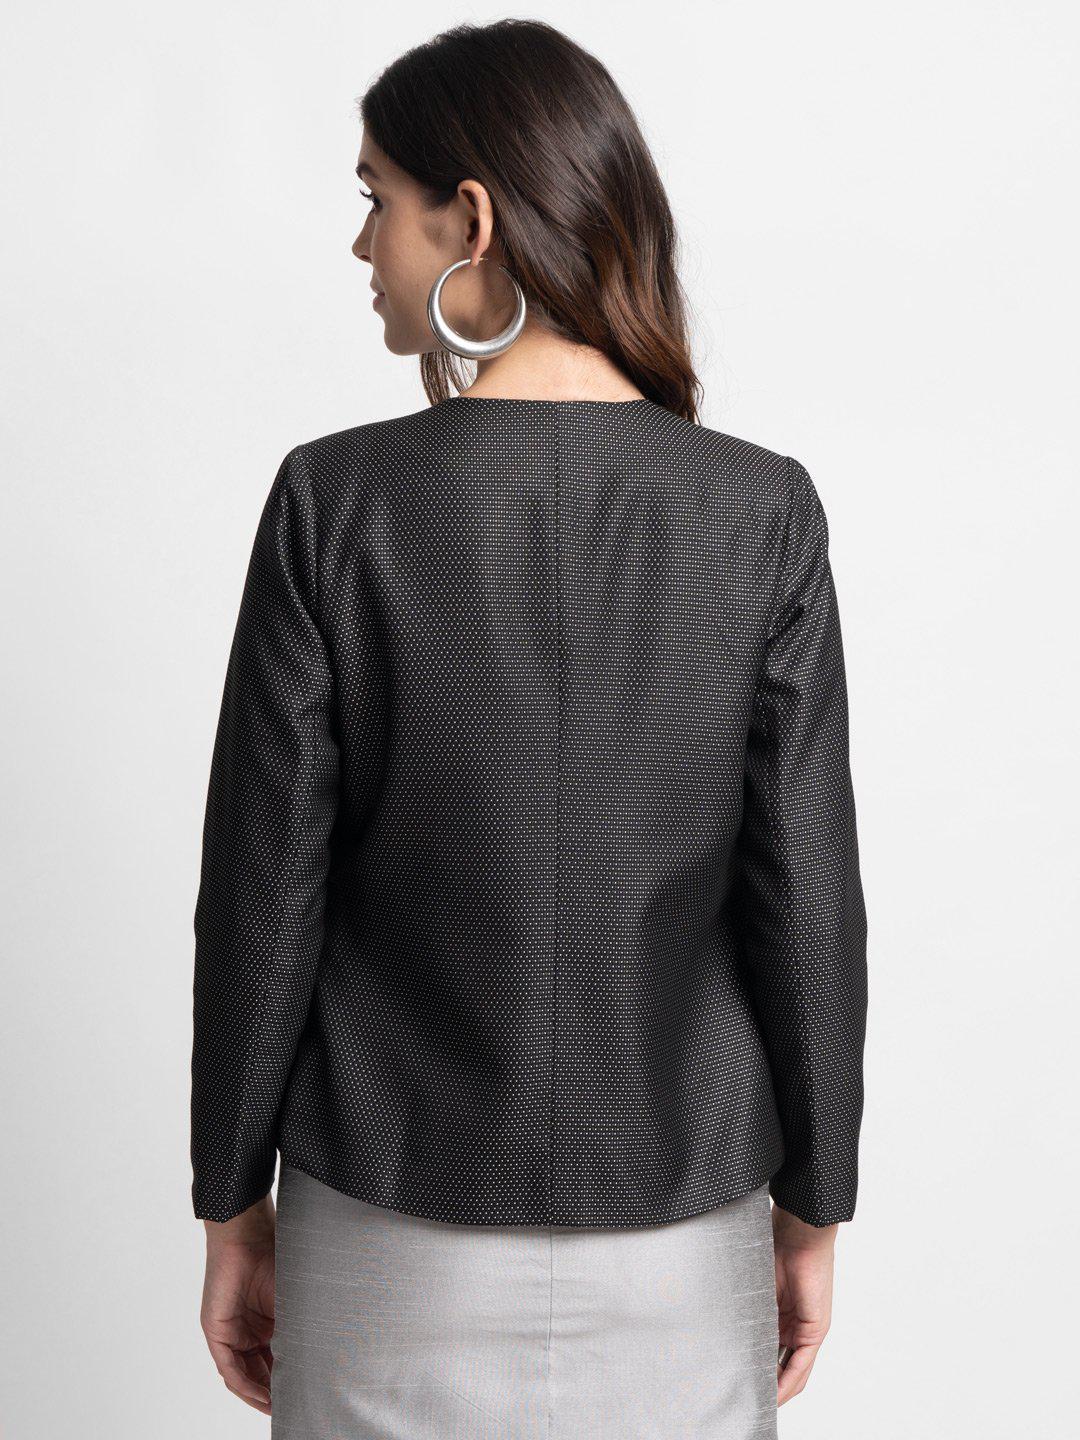 Swiss Dots Evening Jacket For Women - Black